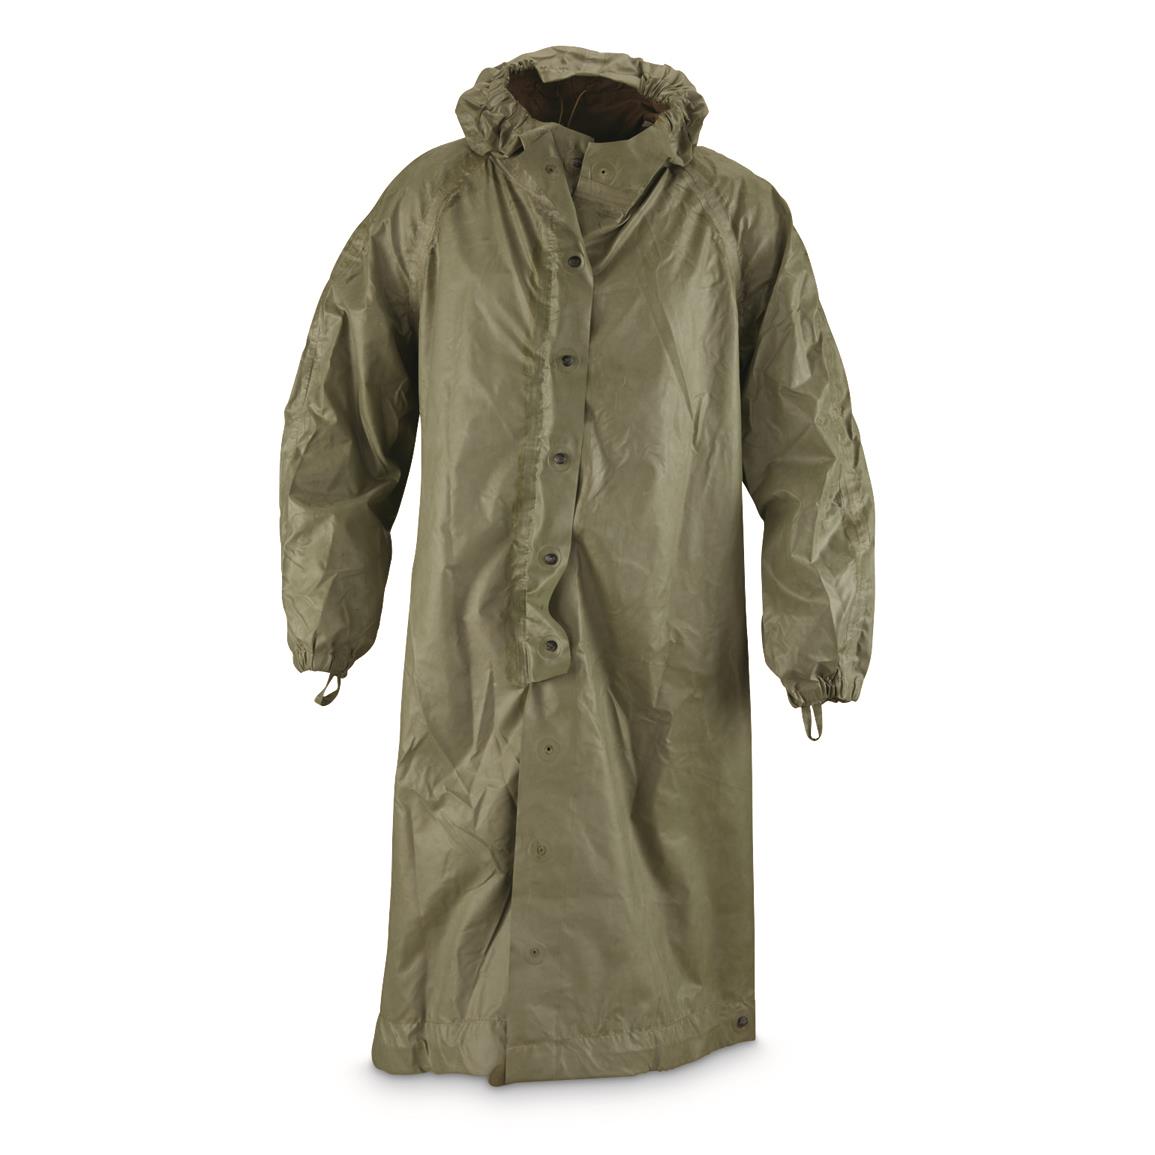 Polish Military Surplus Raincoat, Like New - 674529, Camo Rain Gear & Ponchos at Sportsman's Guide